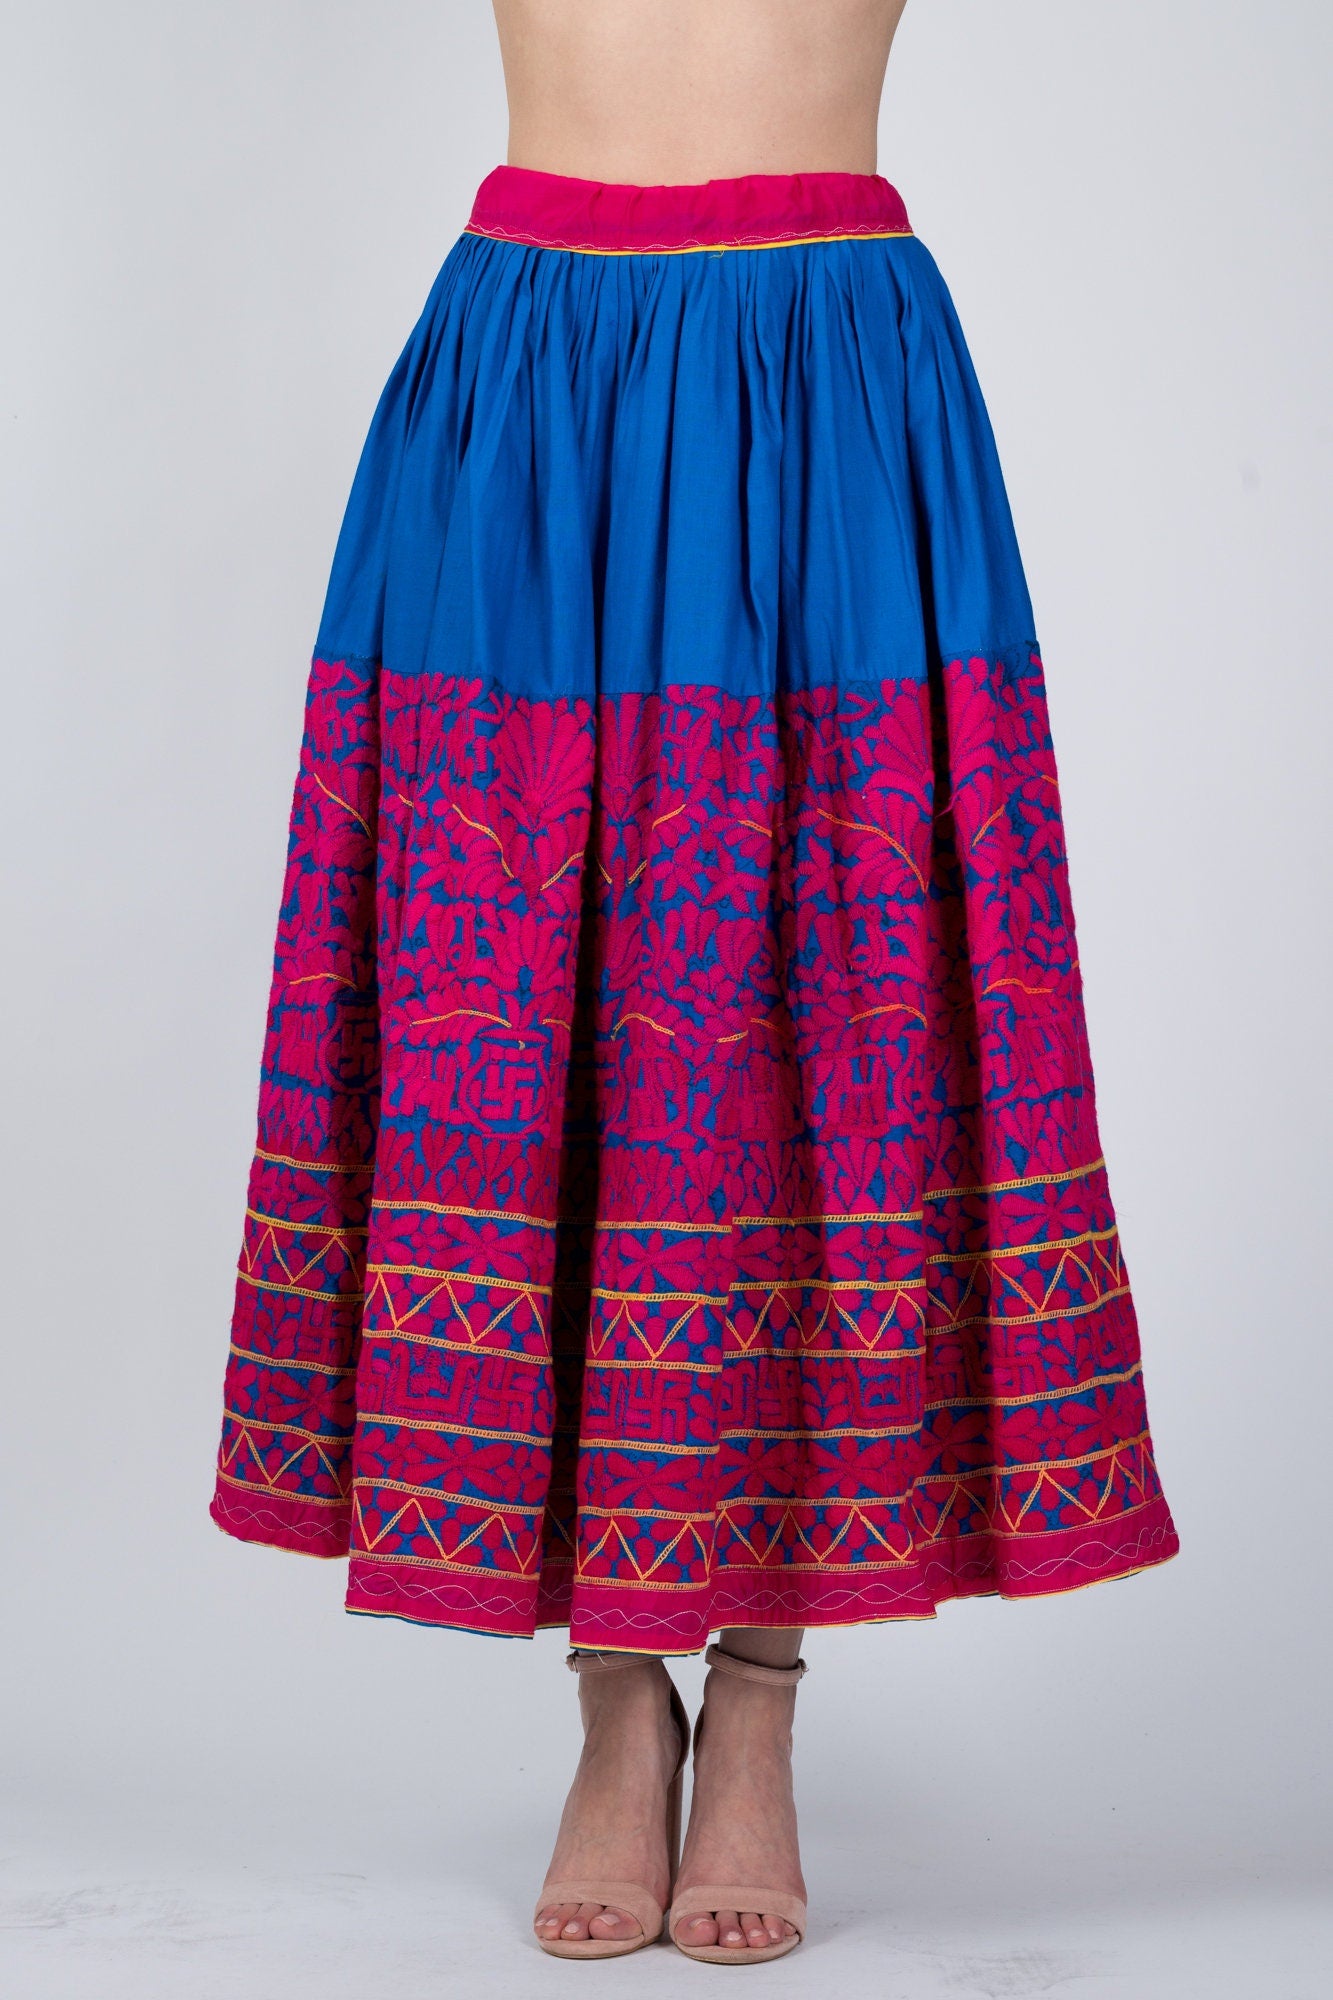 Vintage Indian Rabari Hand Embroidered Ethnic Skirt - Medium to Large 